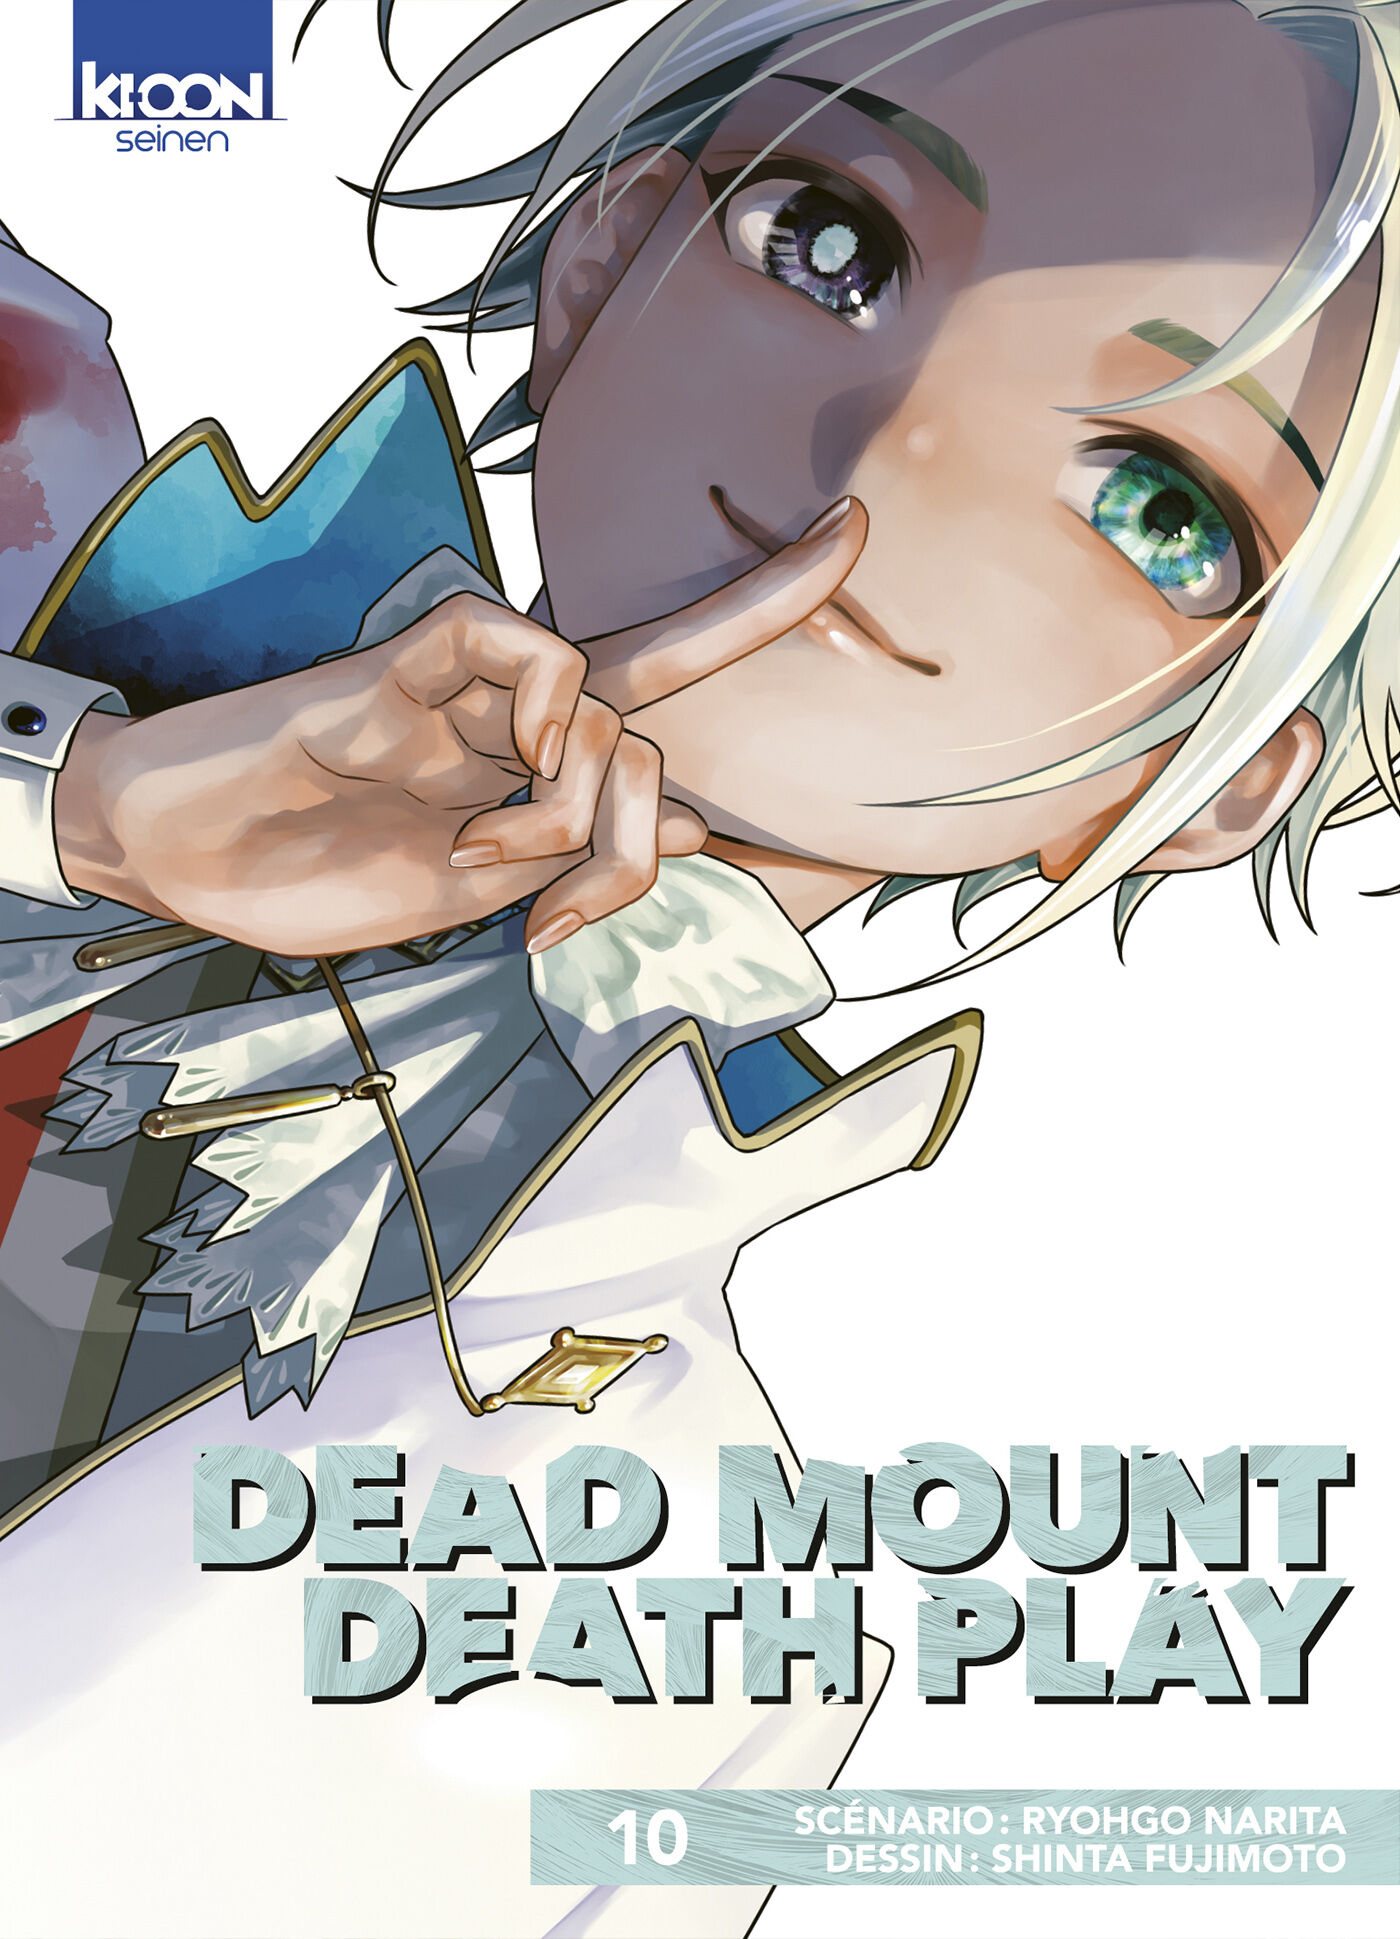 Dead Mount Death Play Episode 1 Review